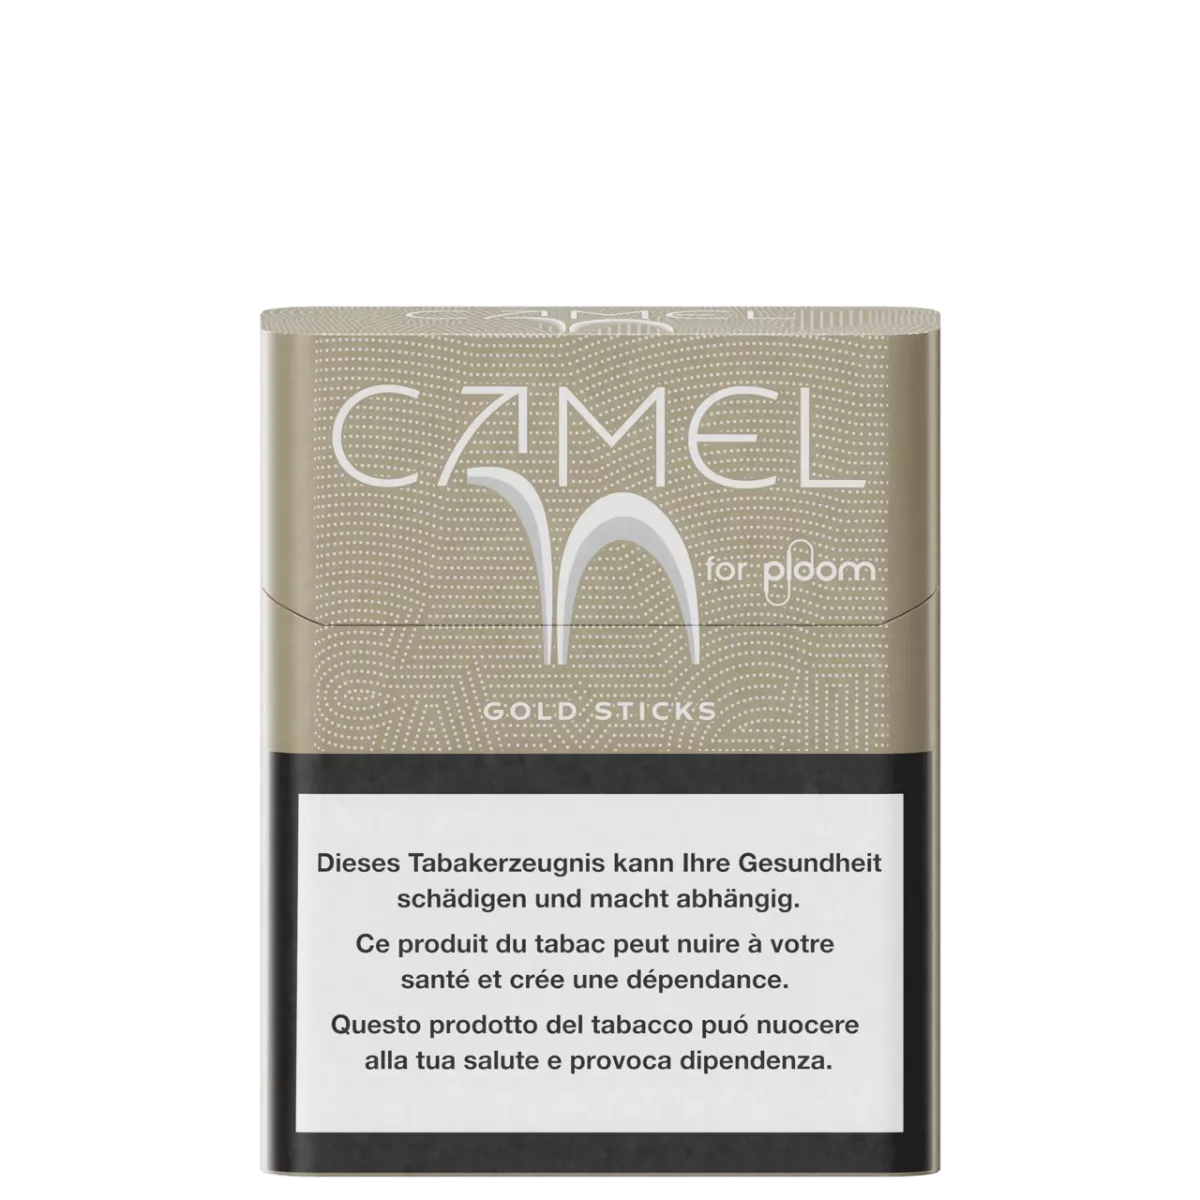 Camel Gold pack de 20 sticks
